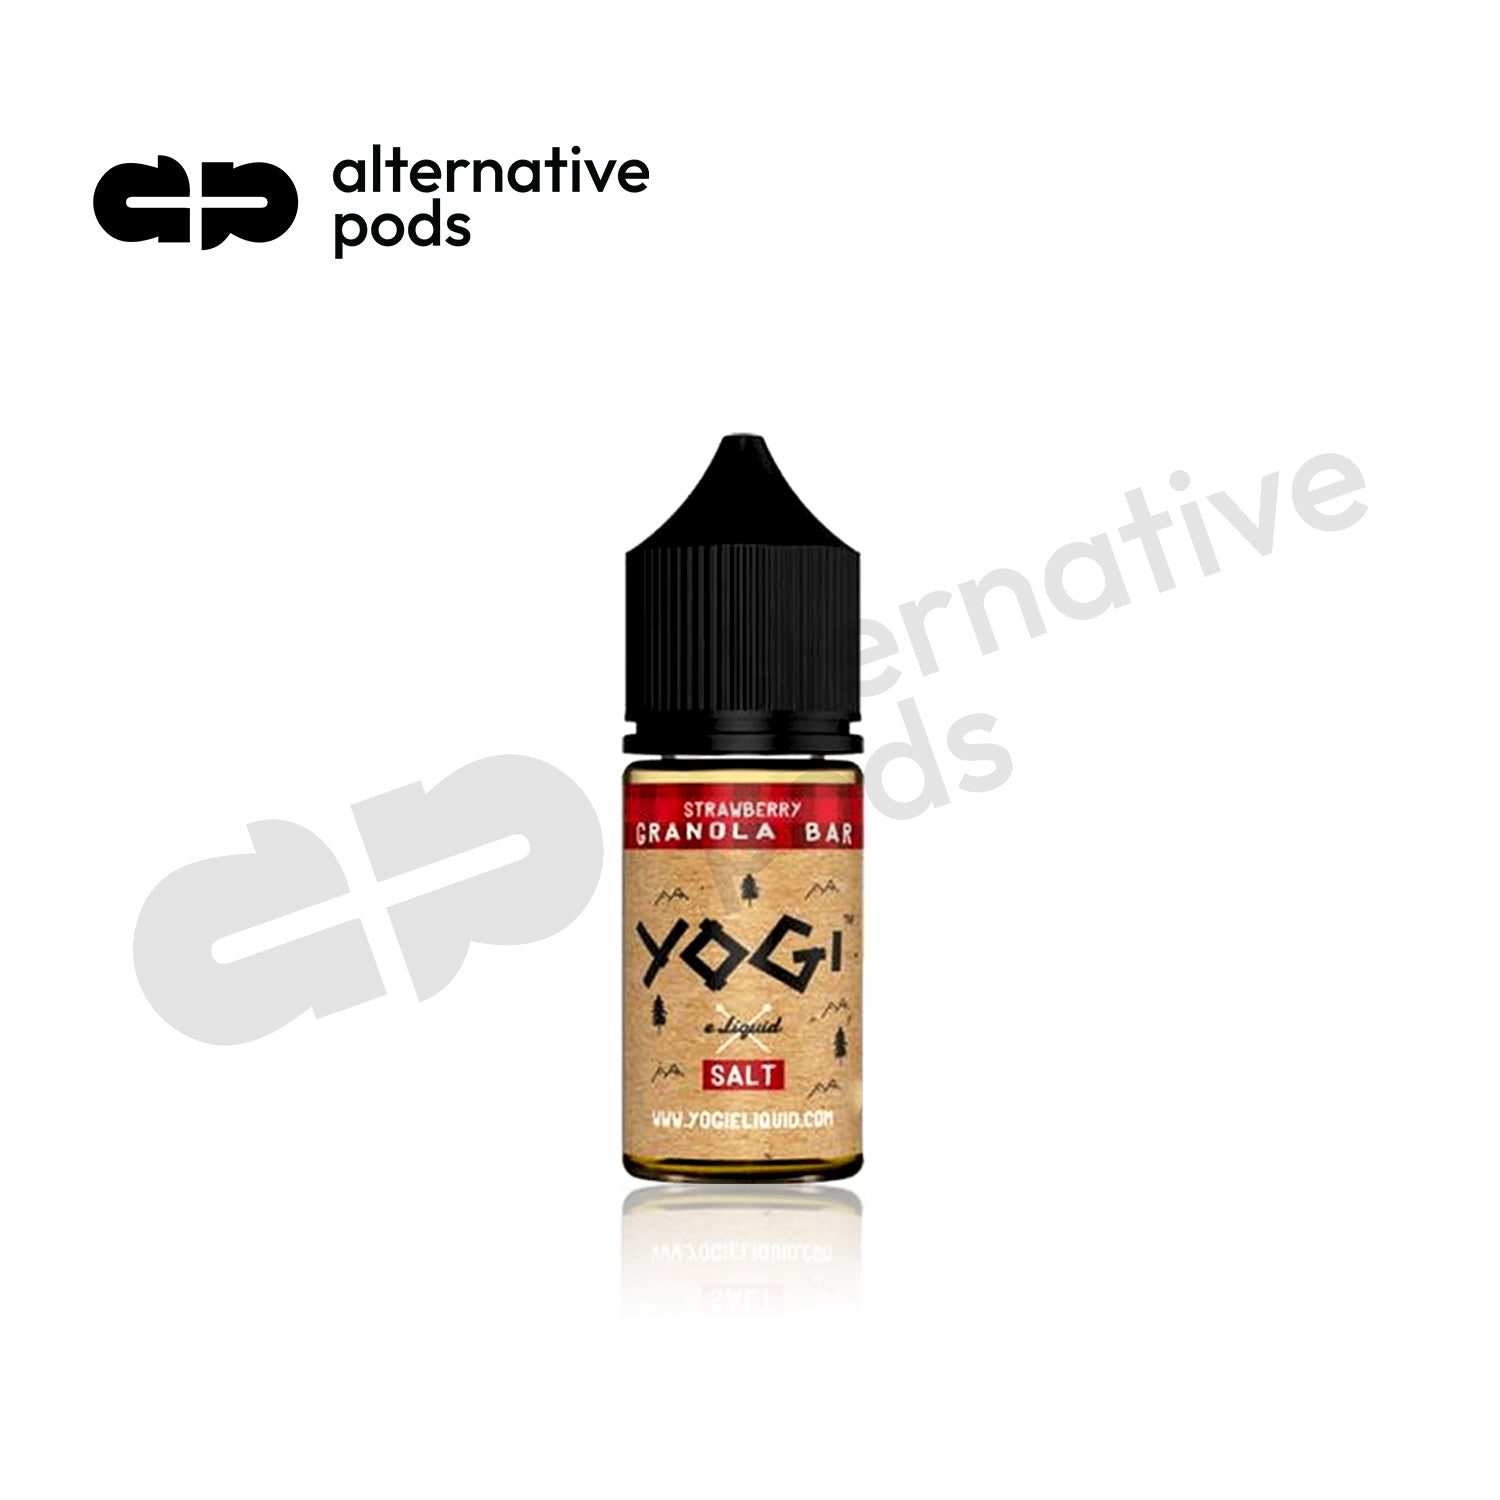 Yogi Salt Nicotine Salt E-Liquid 30ML - Online Vape Shop | Alternative pods | Affordable Vapor Store | Vape Disposables